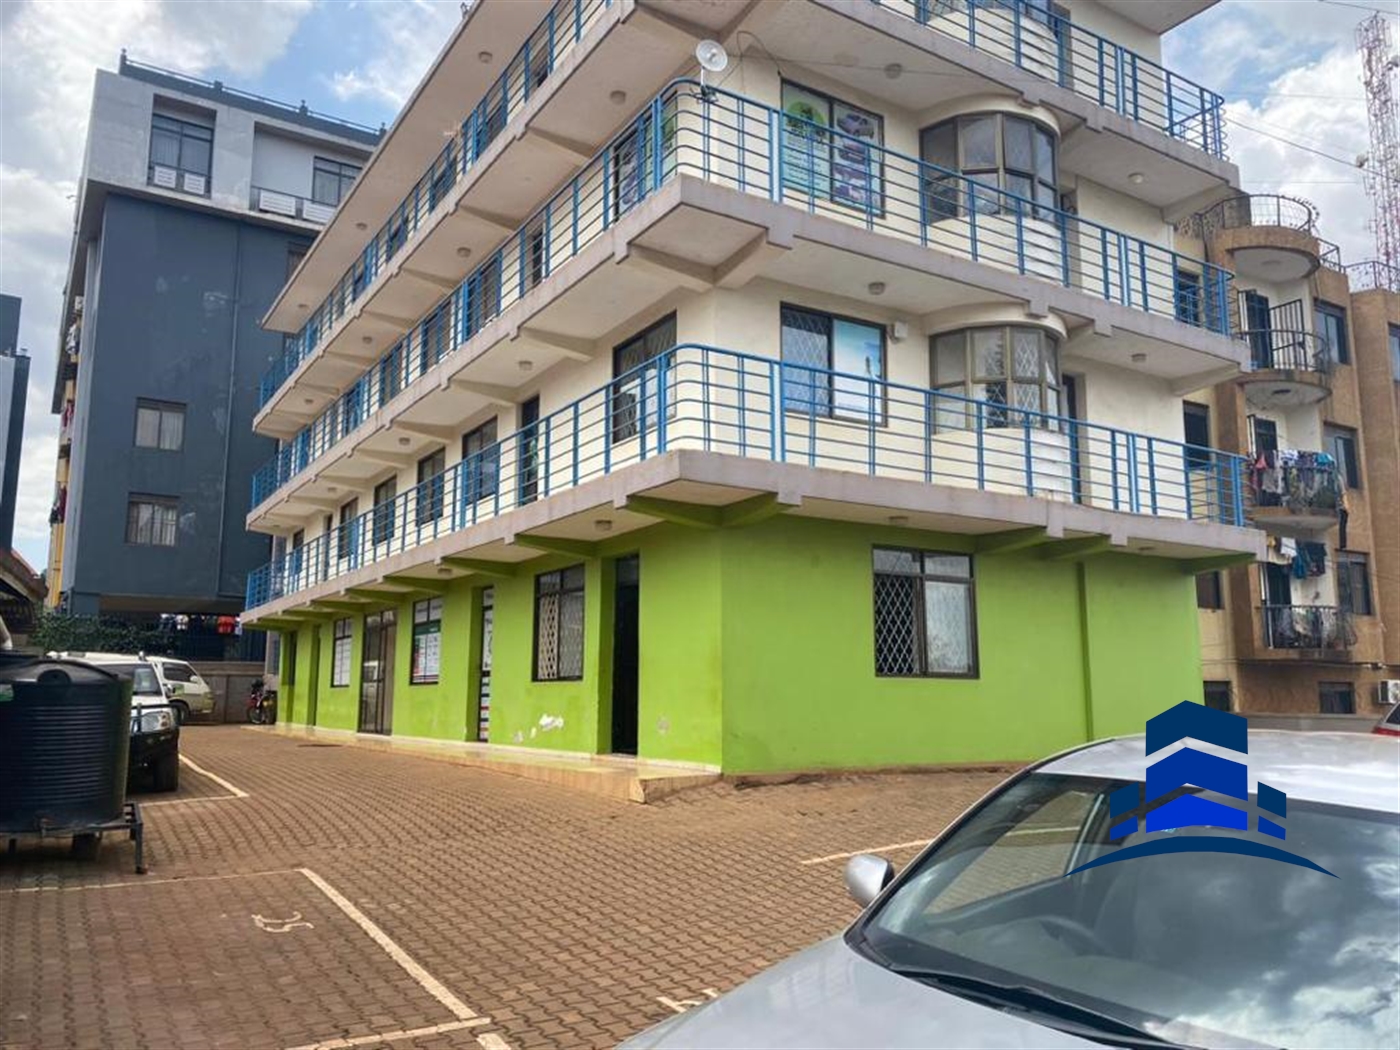 Apartment block for sale in Bugoloobi Wakiso